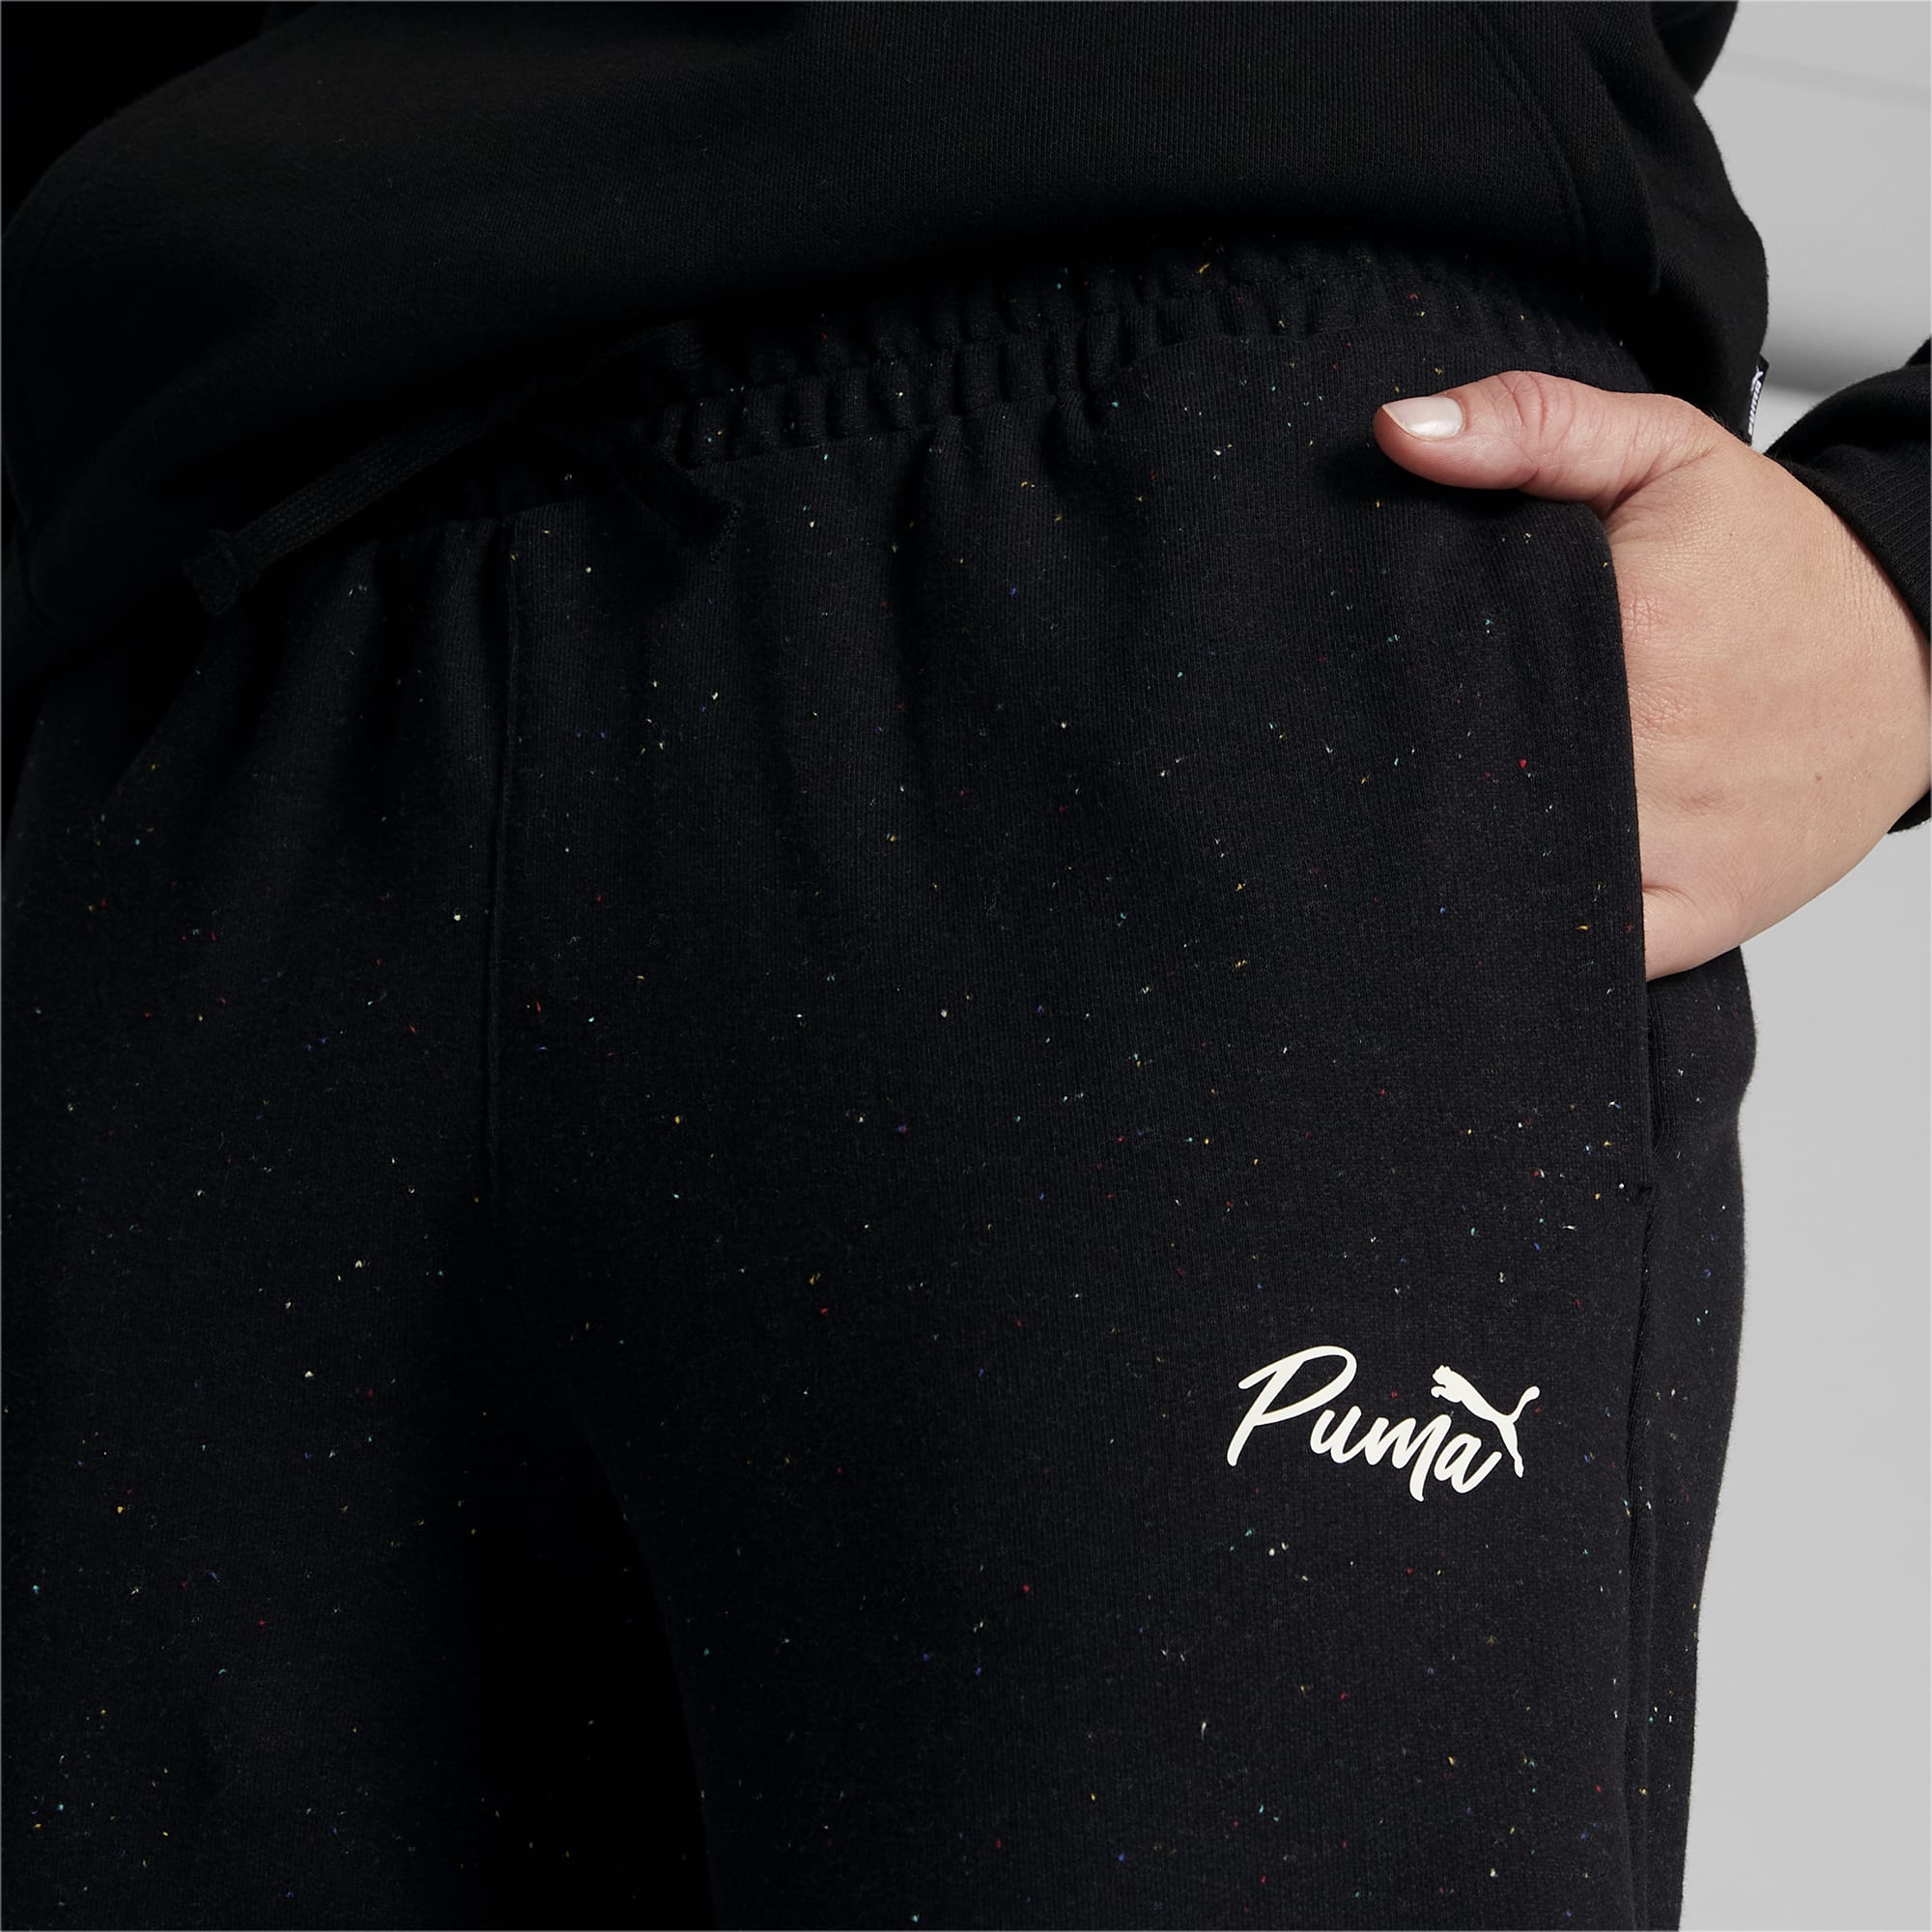 NWT Puma Women's Jogger Refined Track Pants Size X-Large, Purple $60 1B065